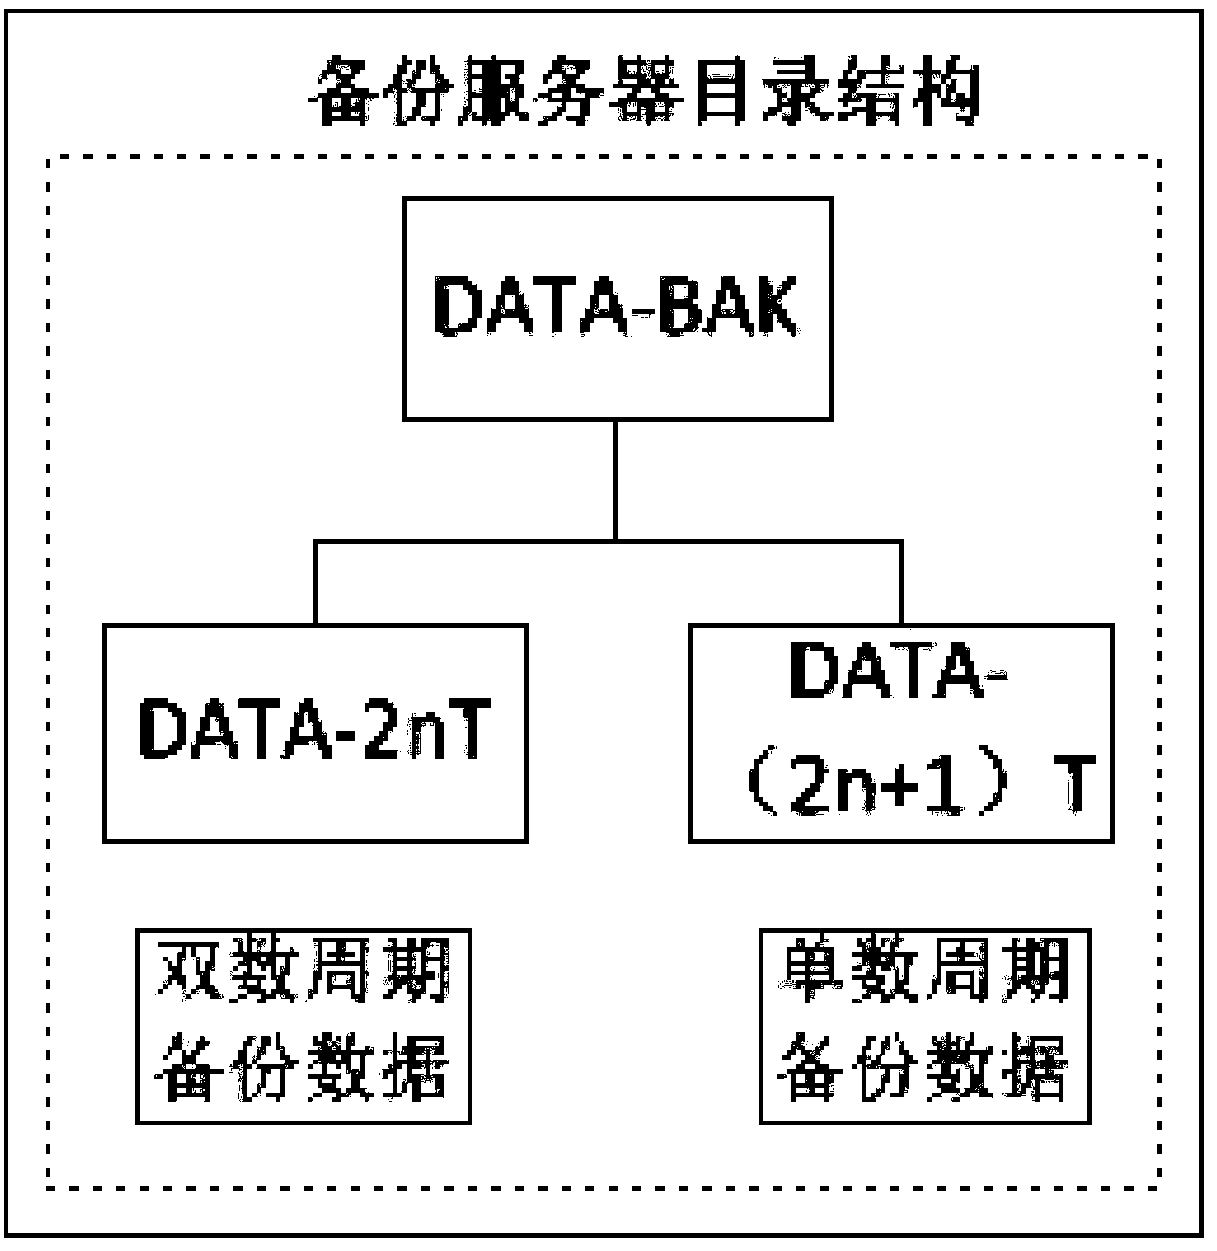 Backup method of data